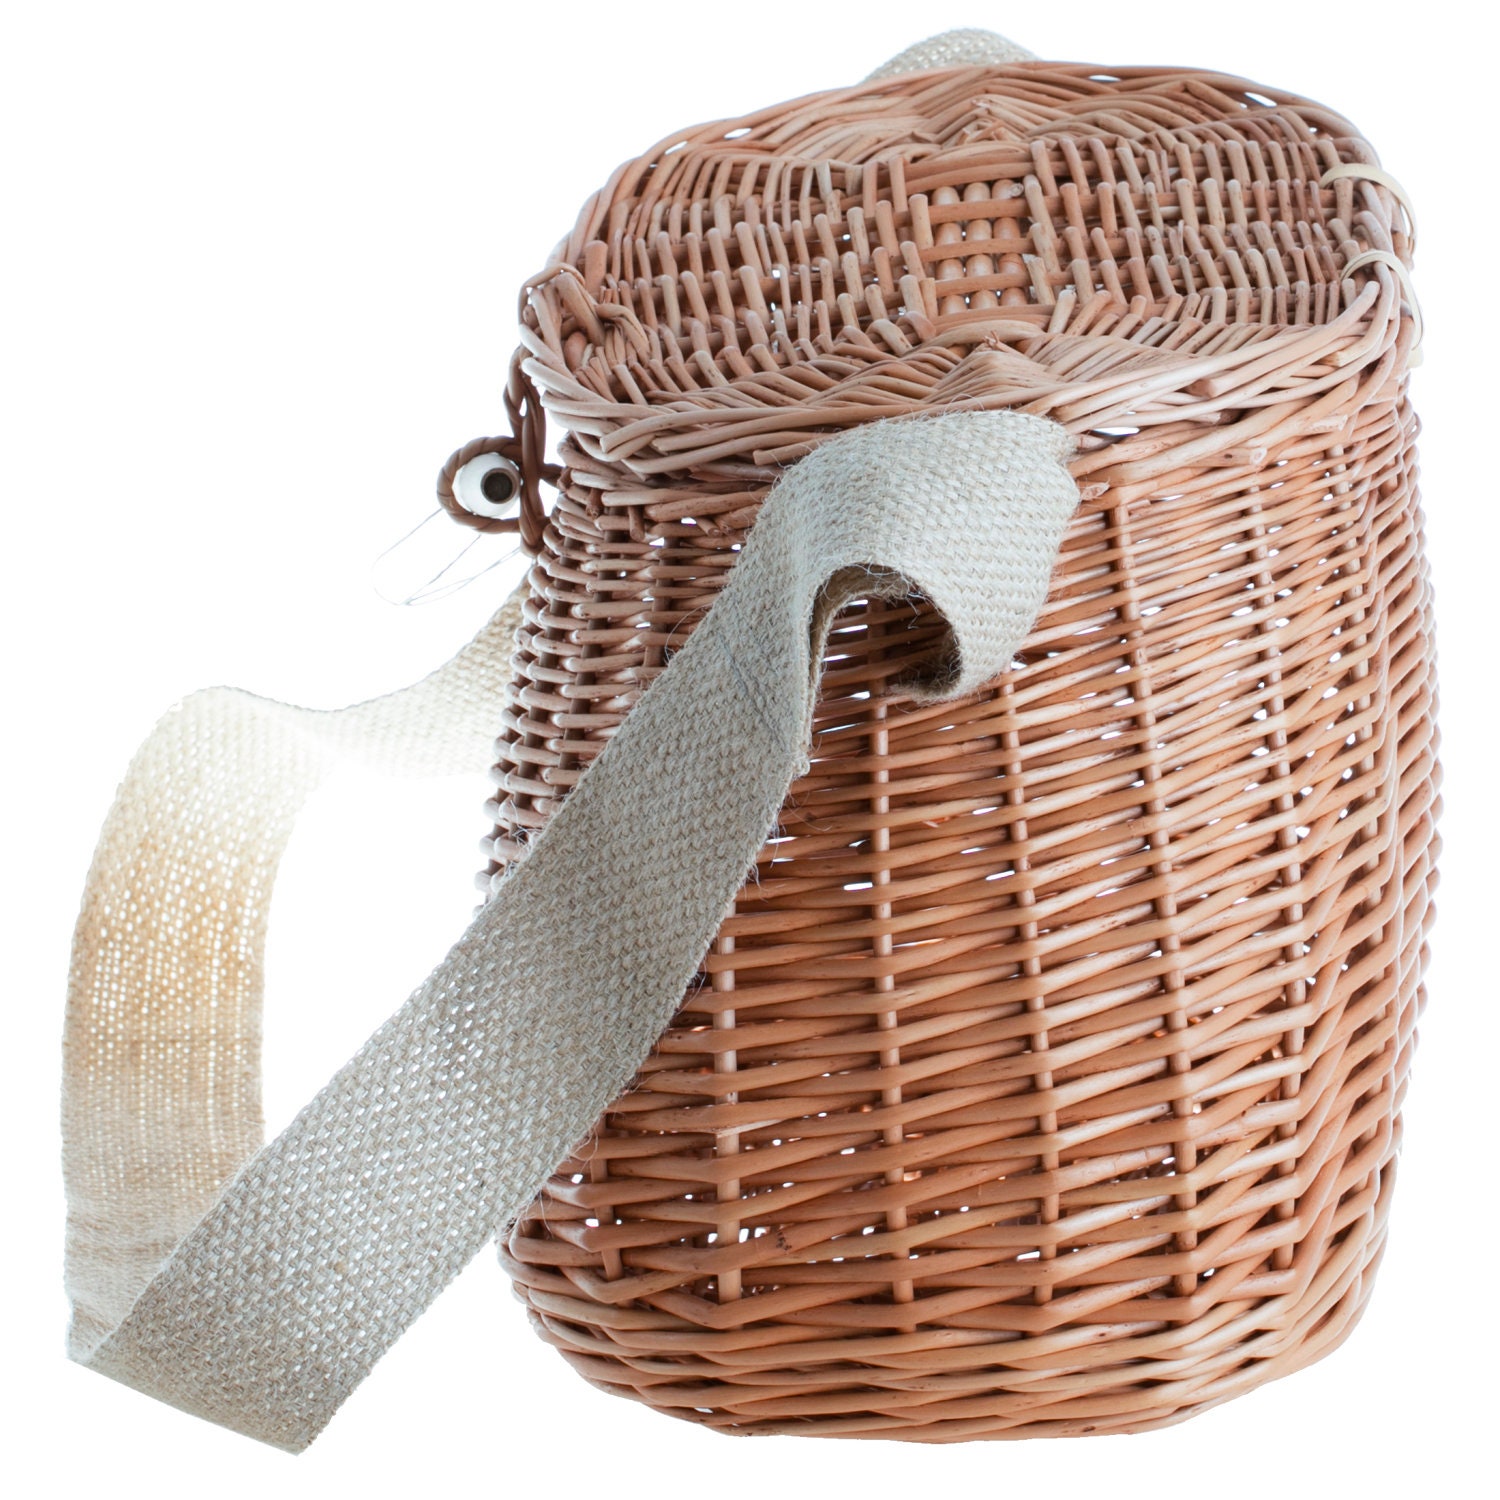 Fish Basket, Woven Wicker Fishing Basket Fish Basket With Shoulder